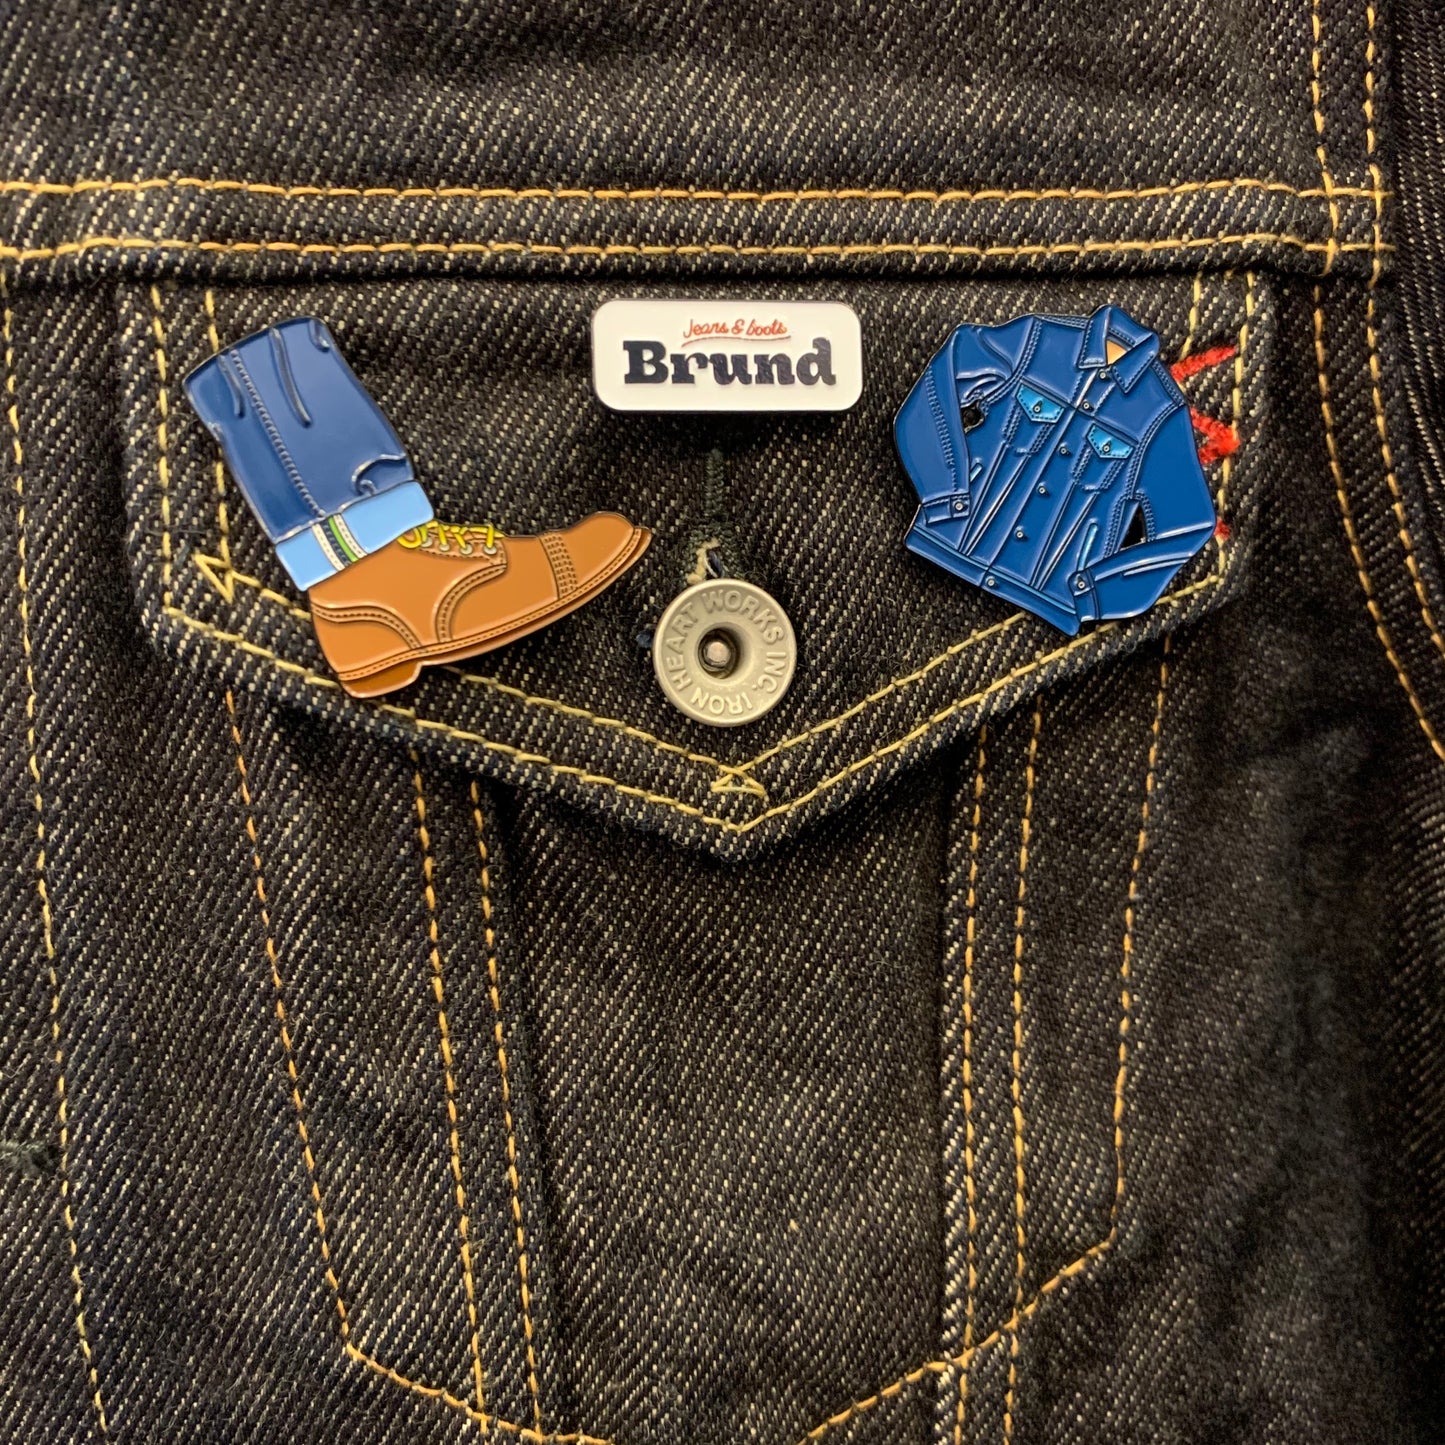 Brund Jeans & Boots Pin Set vol 2